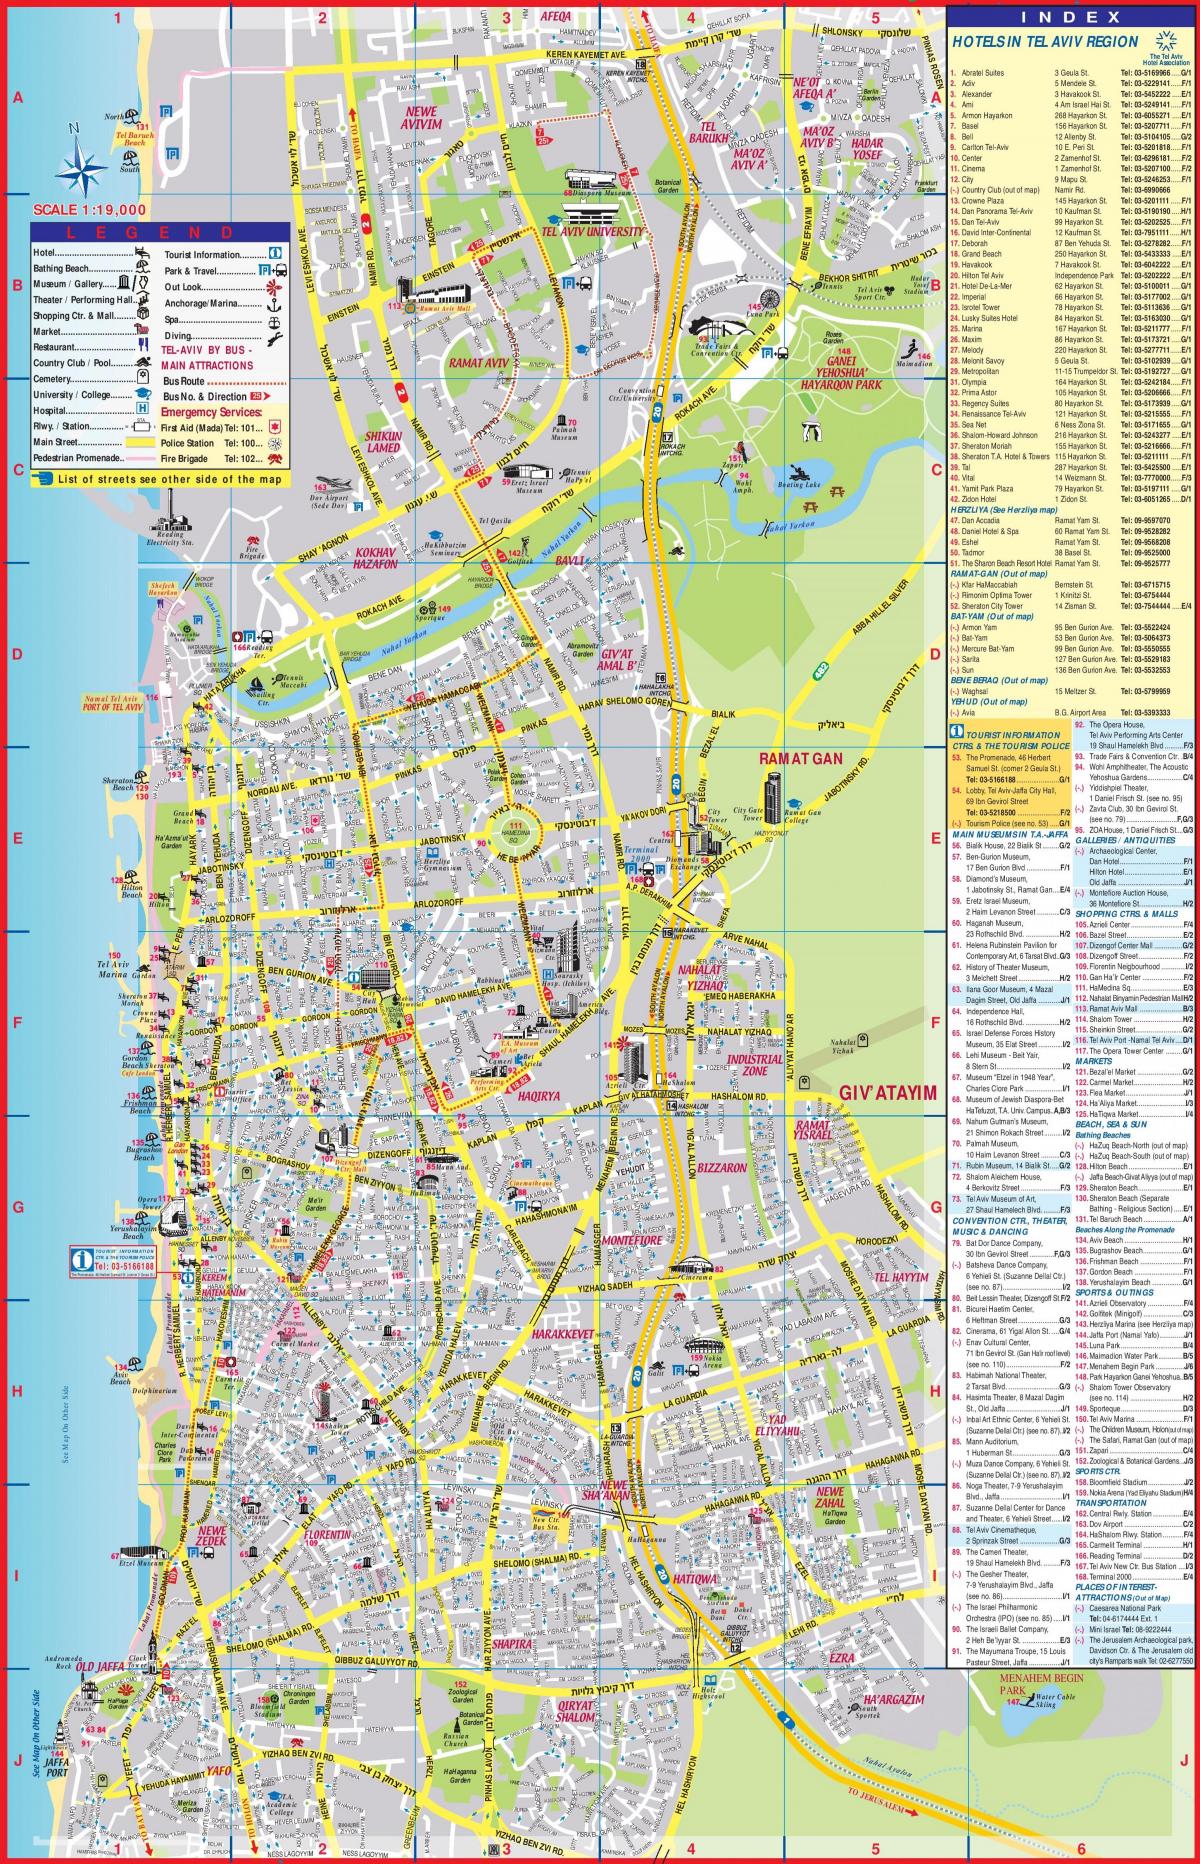 Tel Aviv sightseeing map